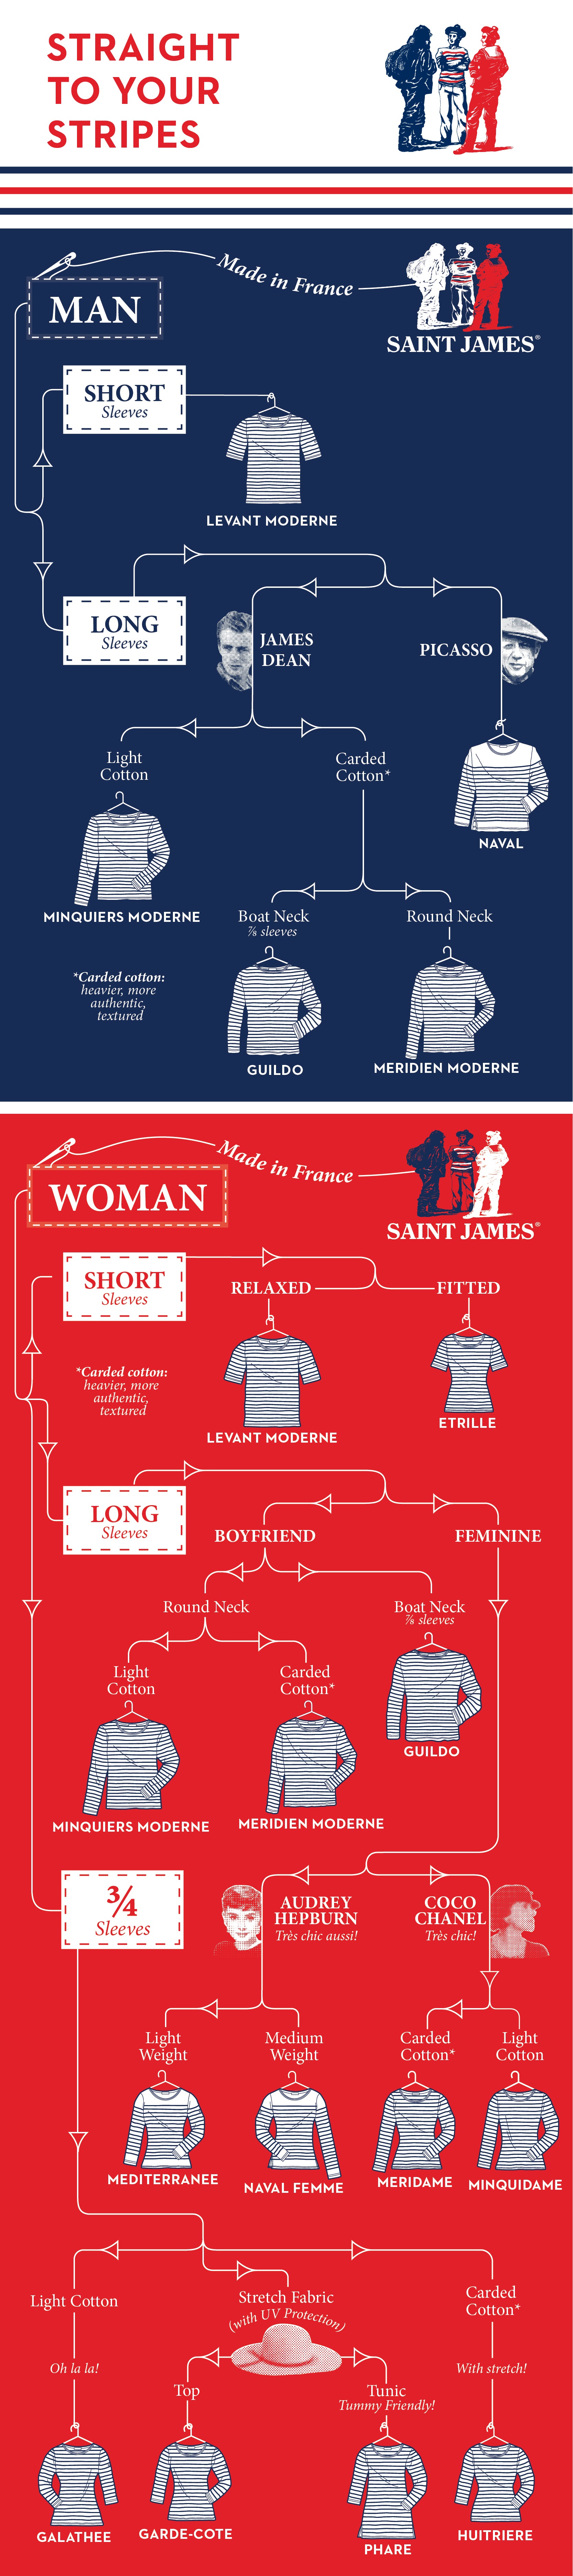 Saint James Guide to Stripes